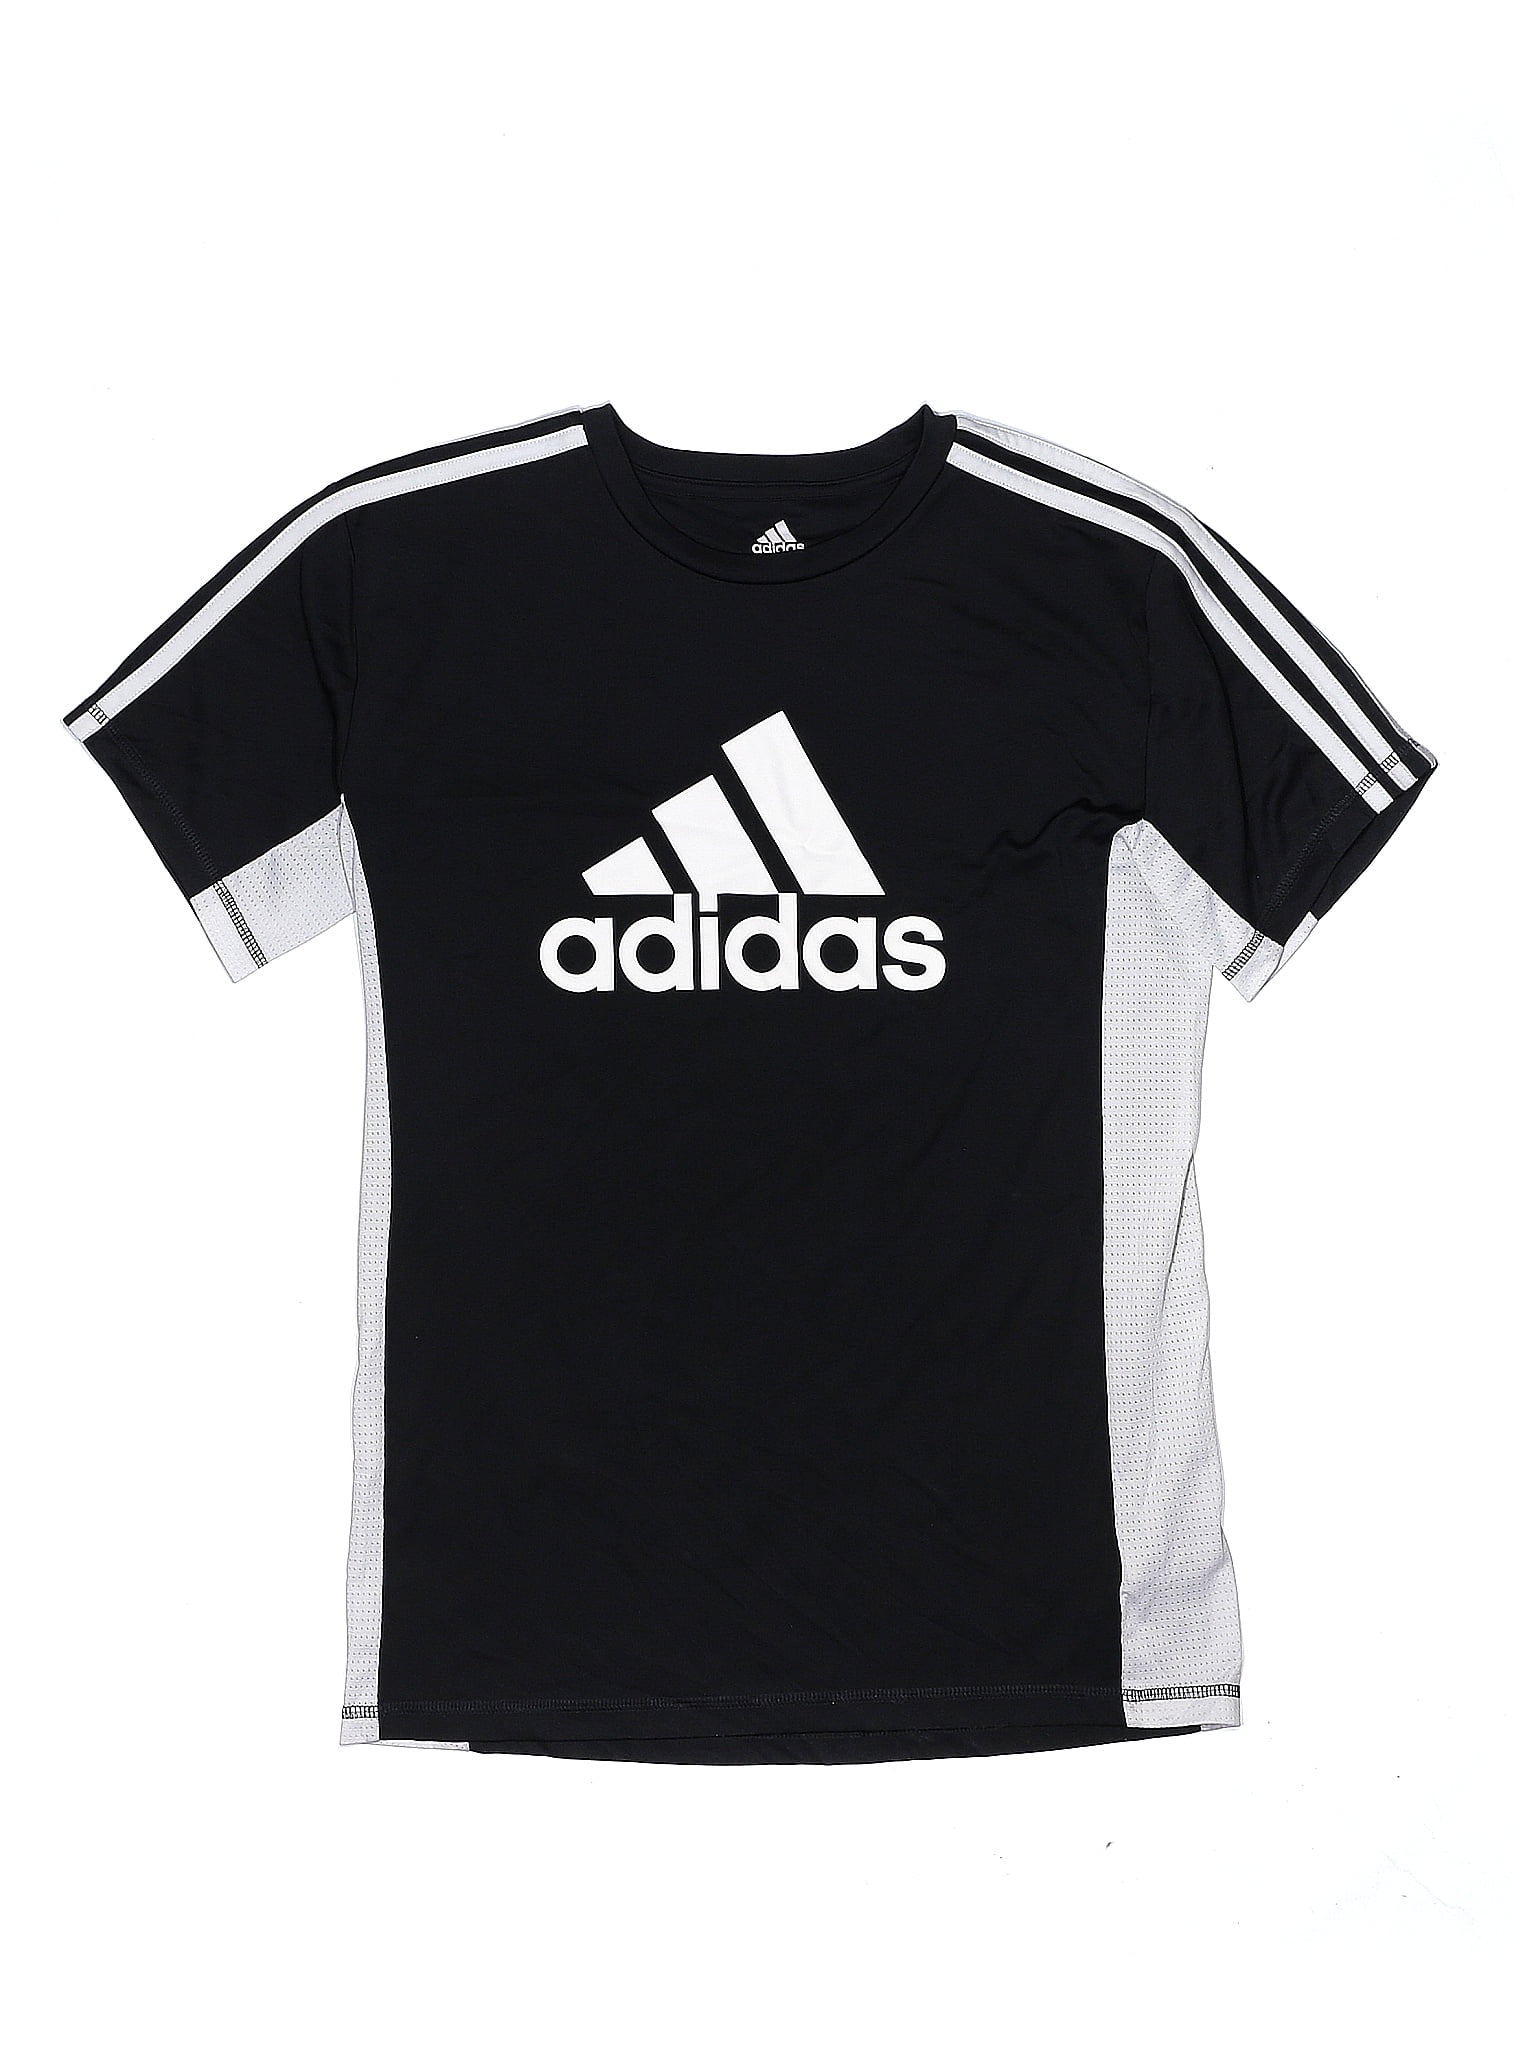 Adidas Girl's Size 14 Active T-Shirt - Walmart.com